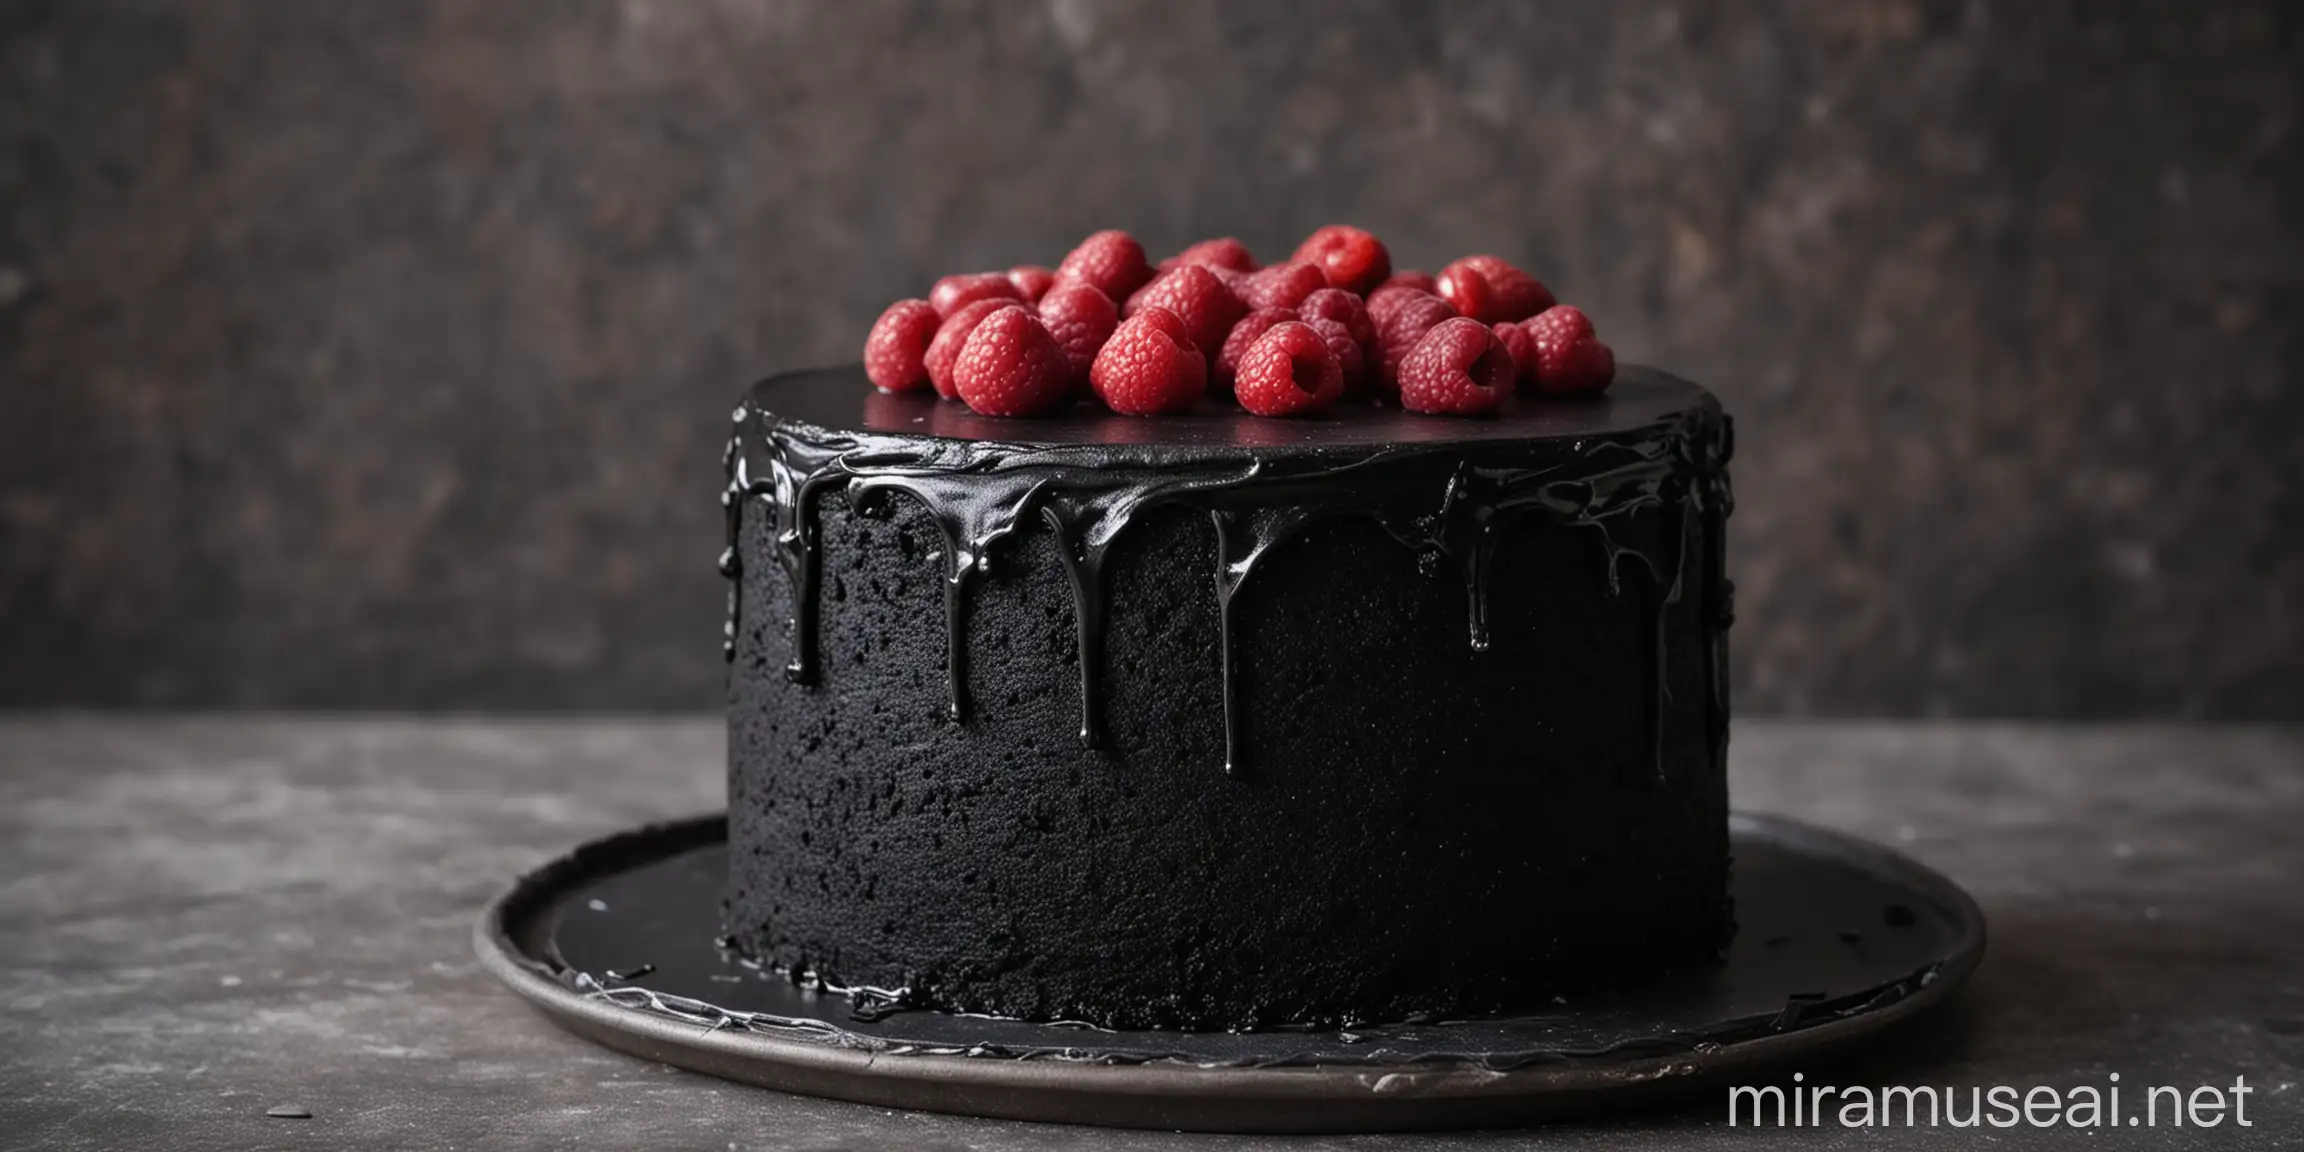 Elegant Black Cake on Round Platter Culinary Delight for Celebrations